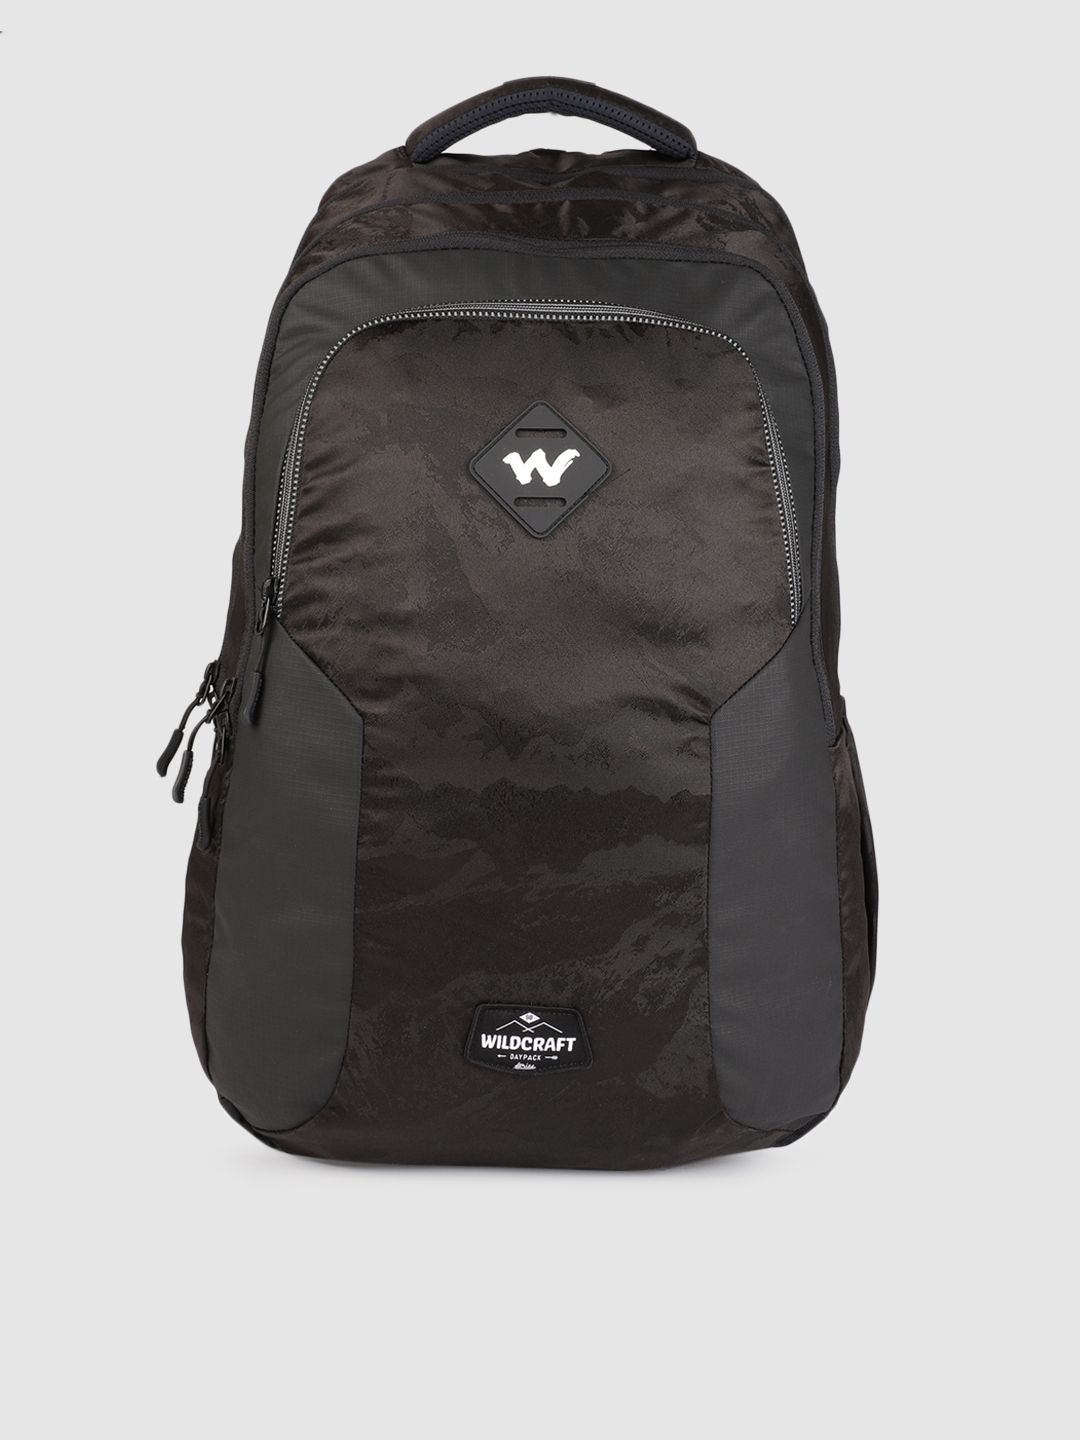 Wildcraft Unisex Black Solid Dapper 3.0 Backpack Price in India